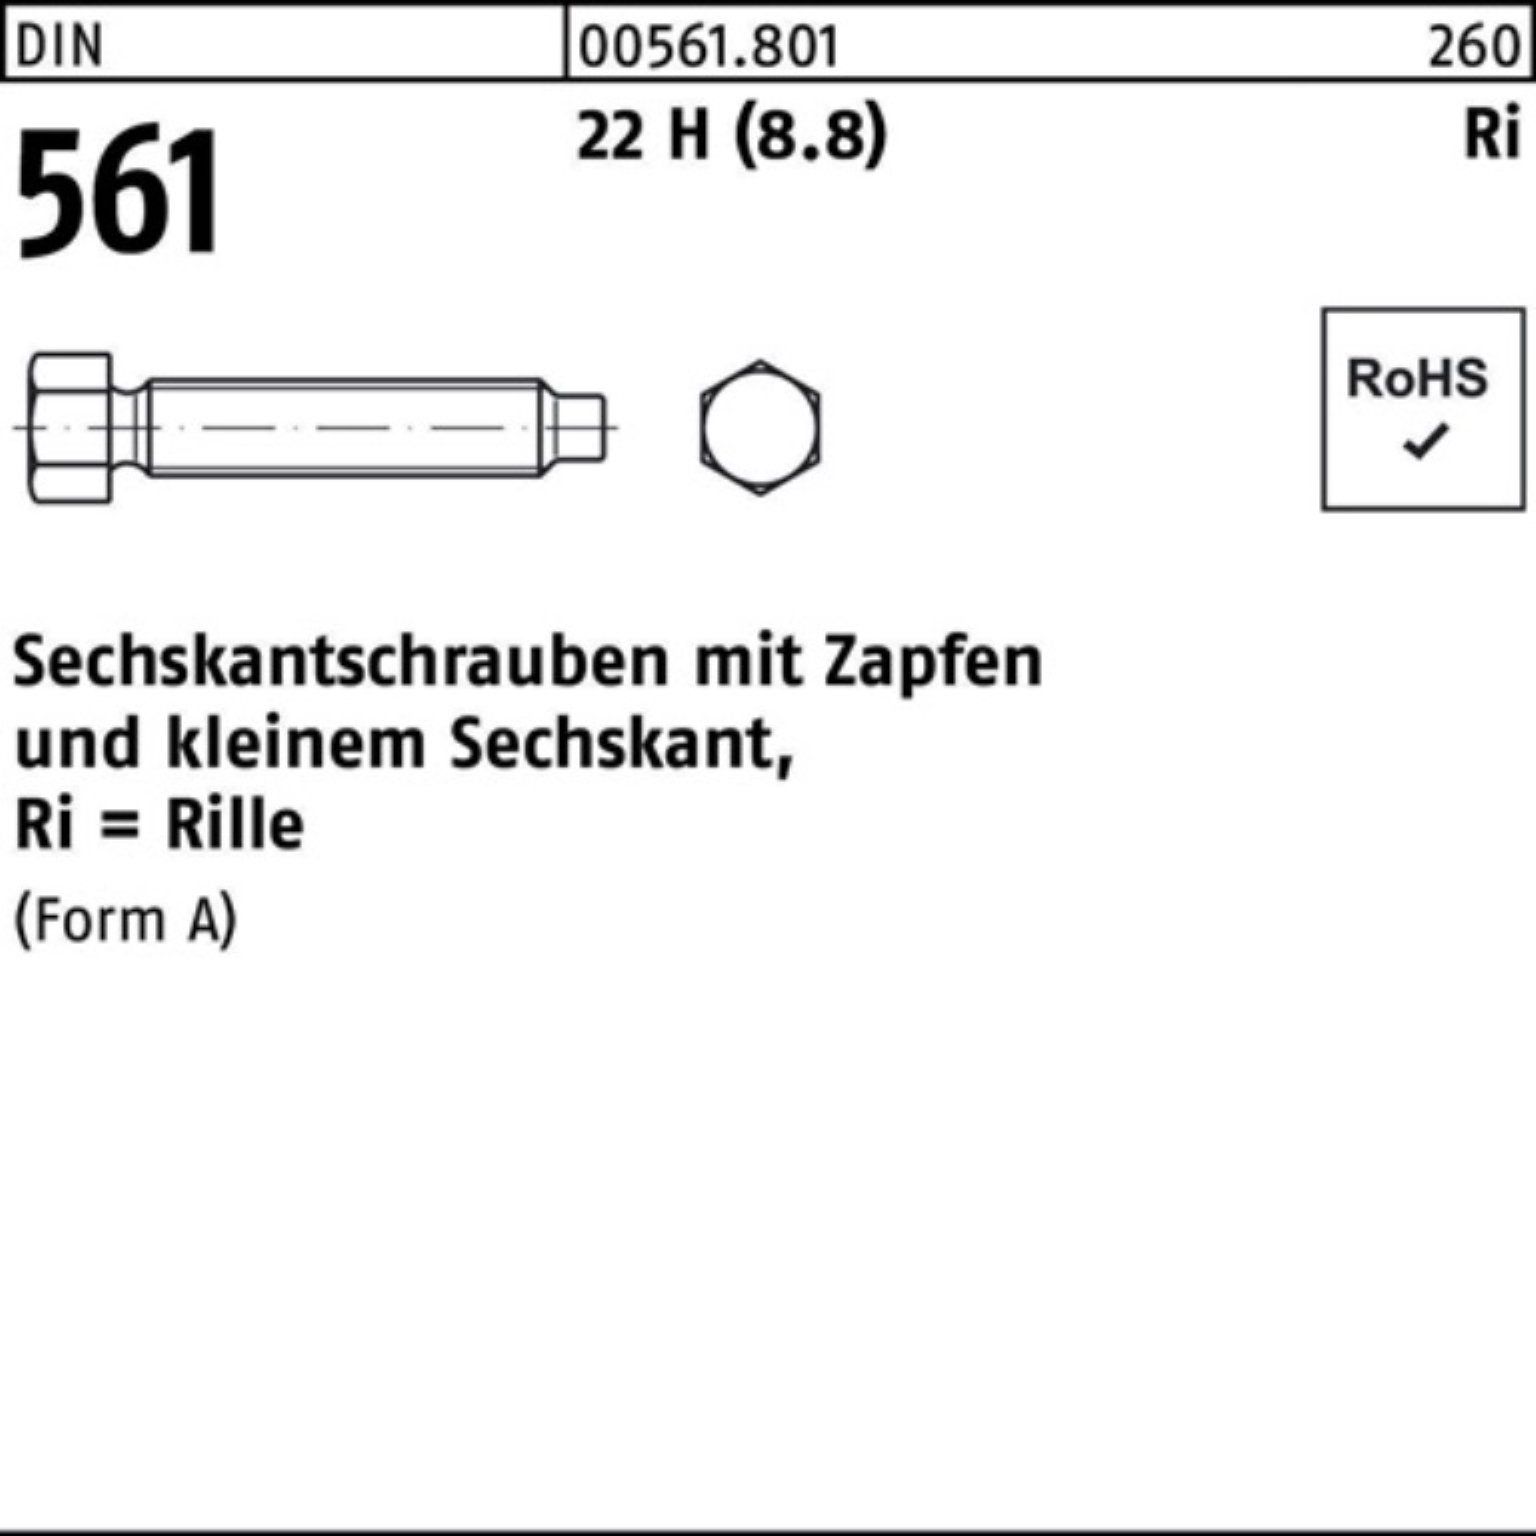 Reyher Sechskantschraube 100er Pack Sechskantschraube DIN 561 Zapfen AM 20x 40 22 H (8.8) 10 St